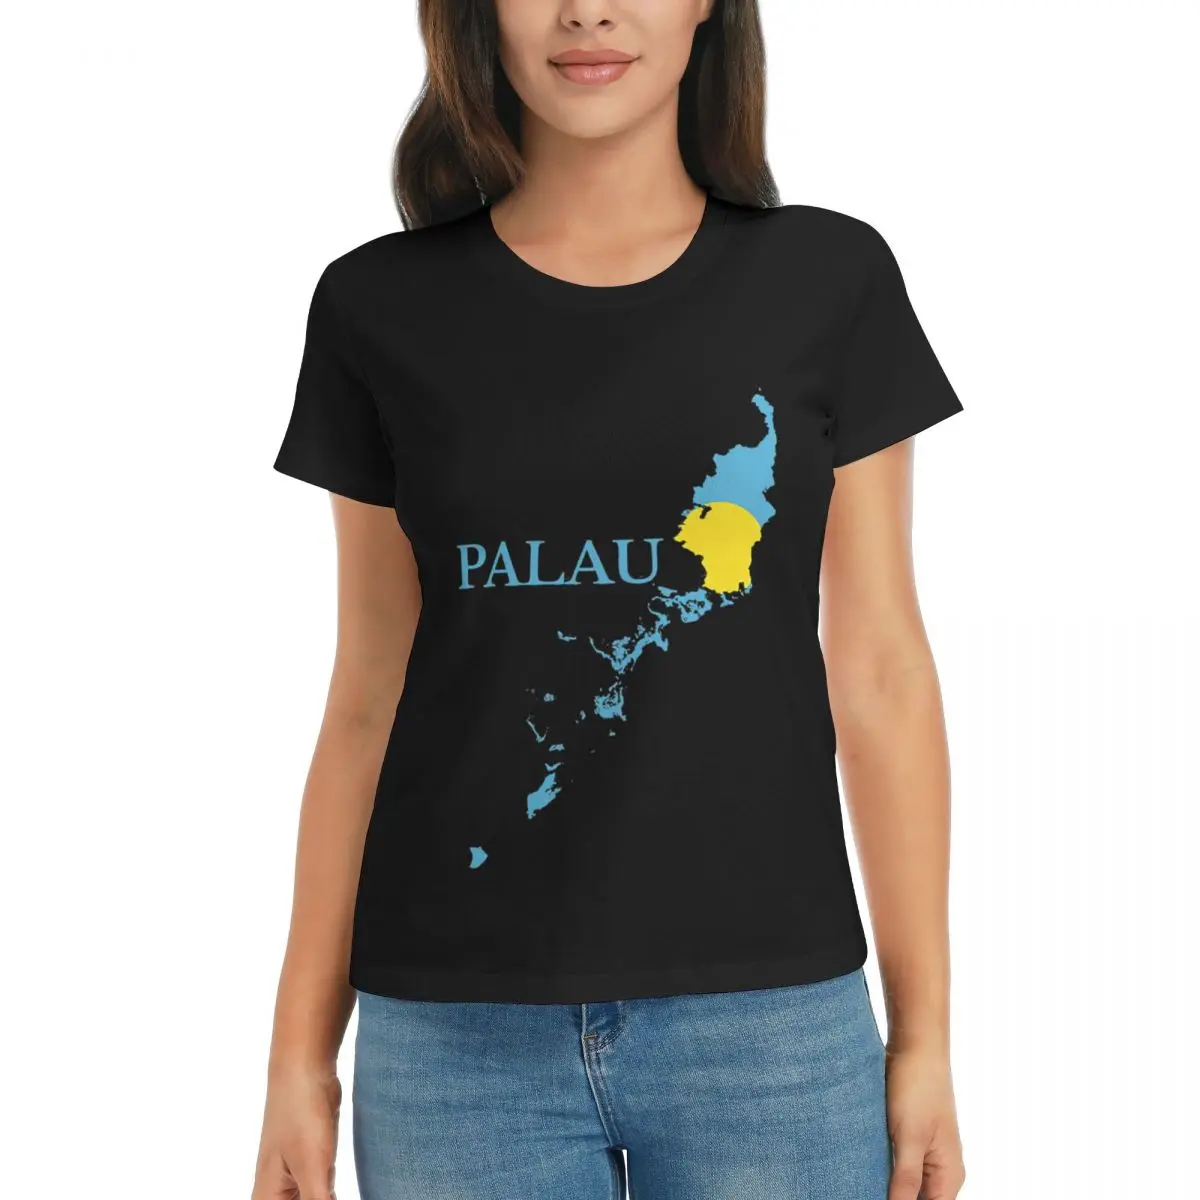 

Motion Republic Of Palau Beluu Er A Belau Map Flag 282-3 Tees Black Novelty High grade Fitness USA Size